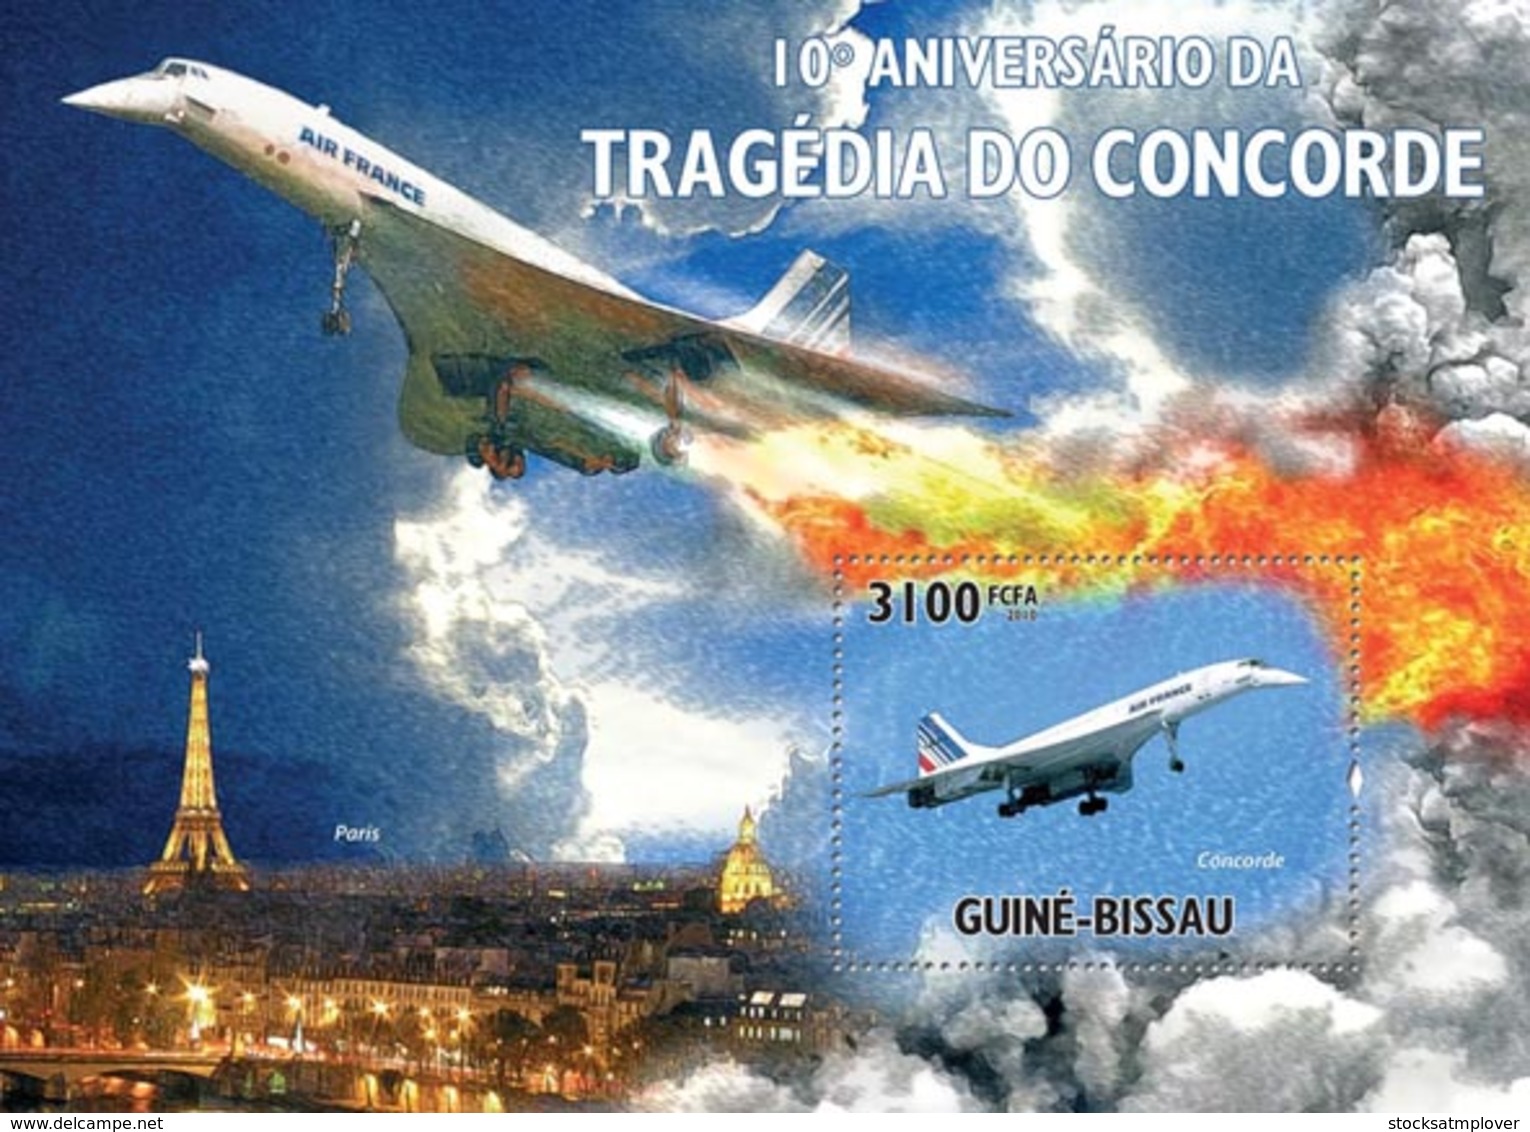 Guinea Bissau 2010 10th Anniversary Concorde Tragedy - Guinée-Bissau